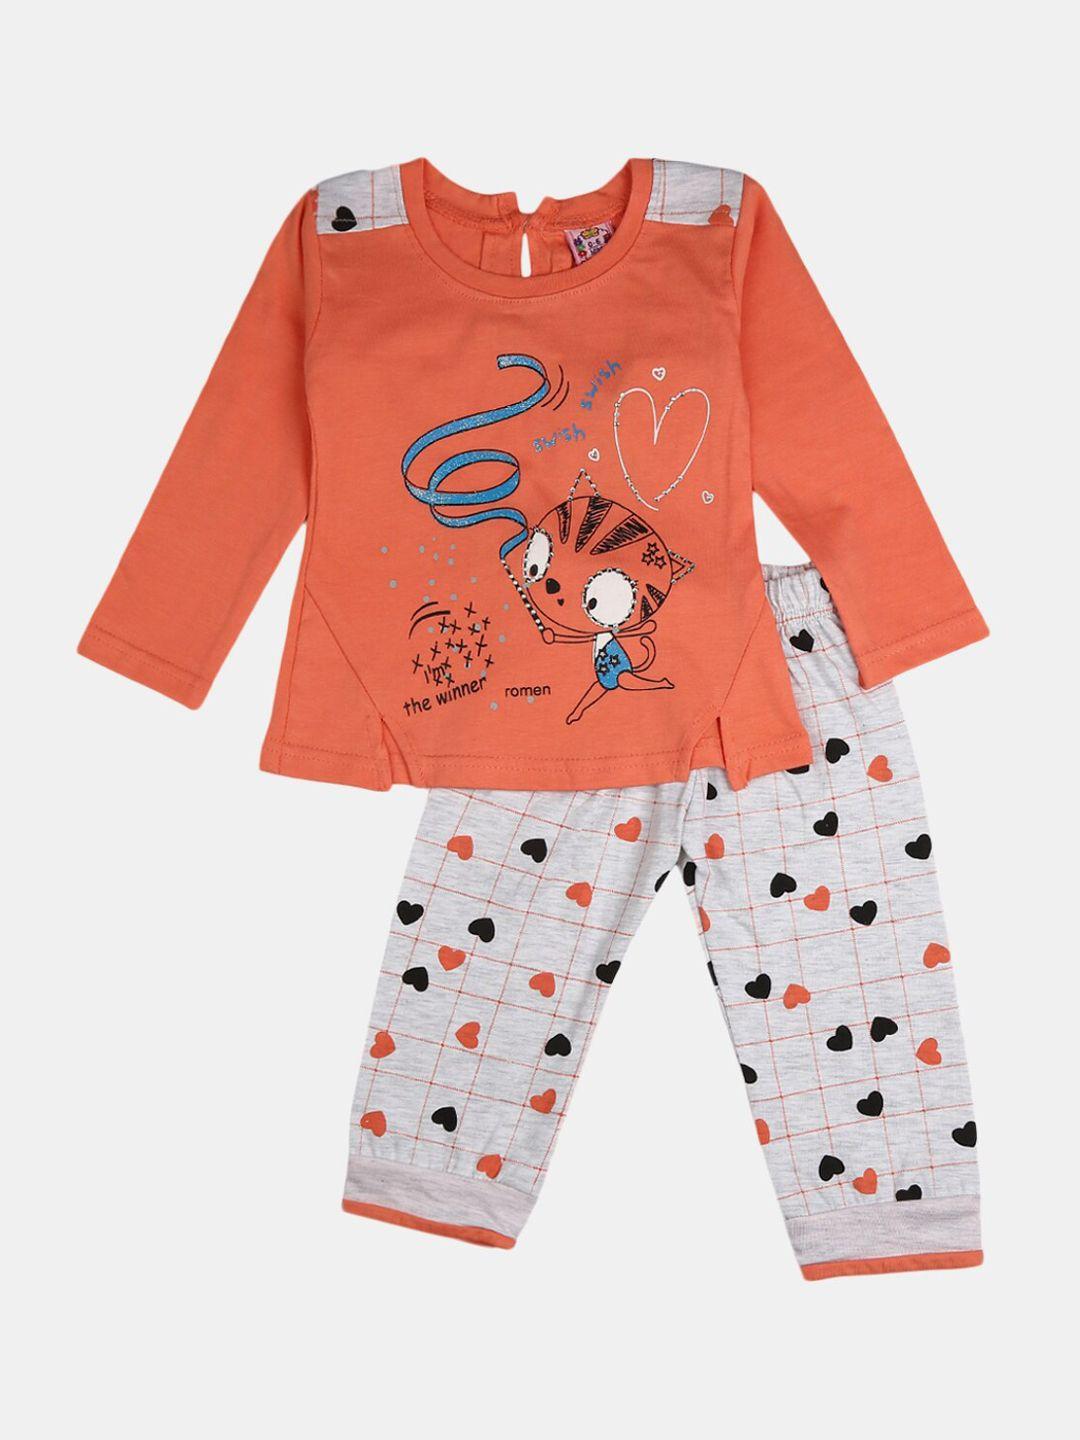 v-mart kids orange & grey printed top with pyjama